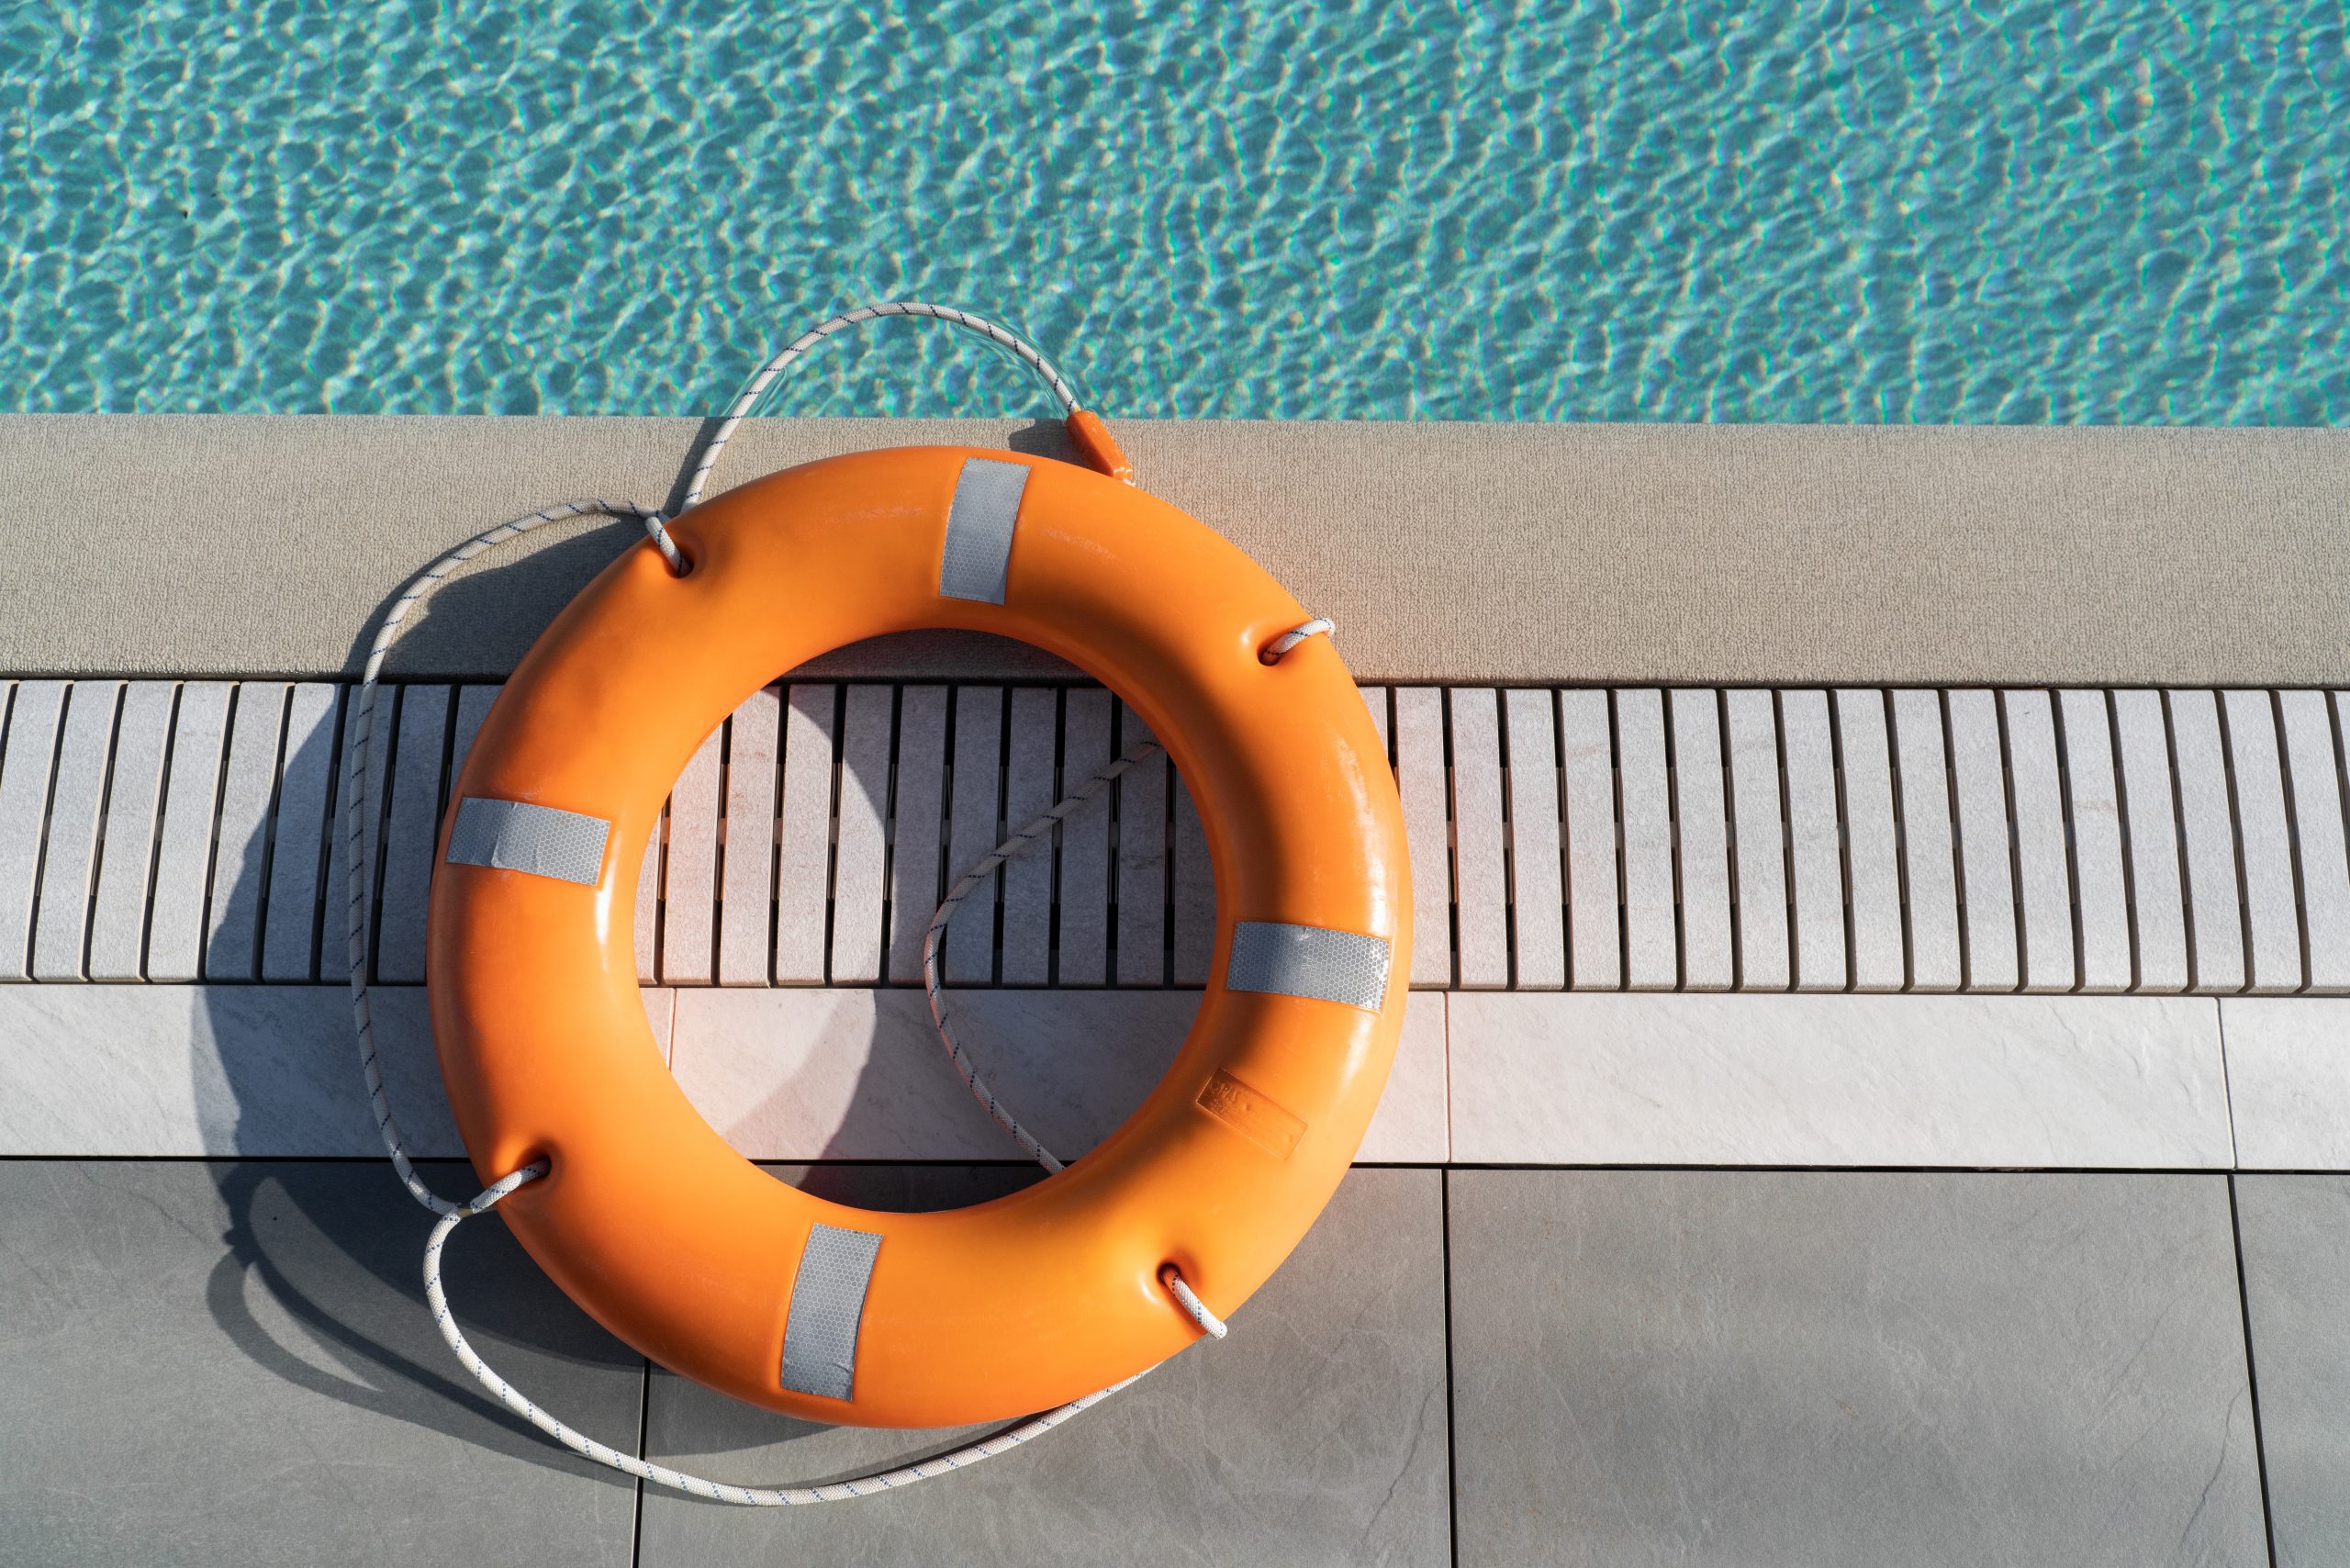 Orange lifebuoy by the pool